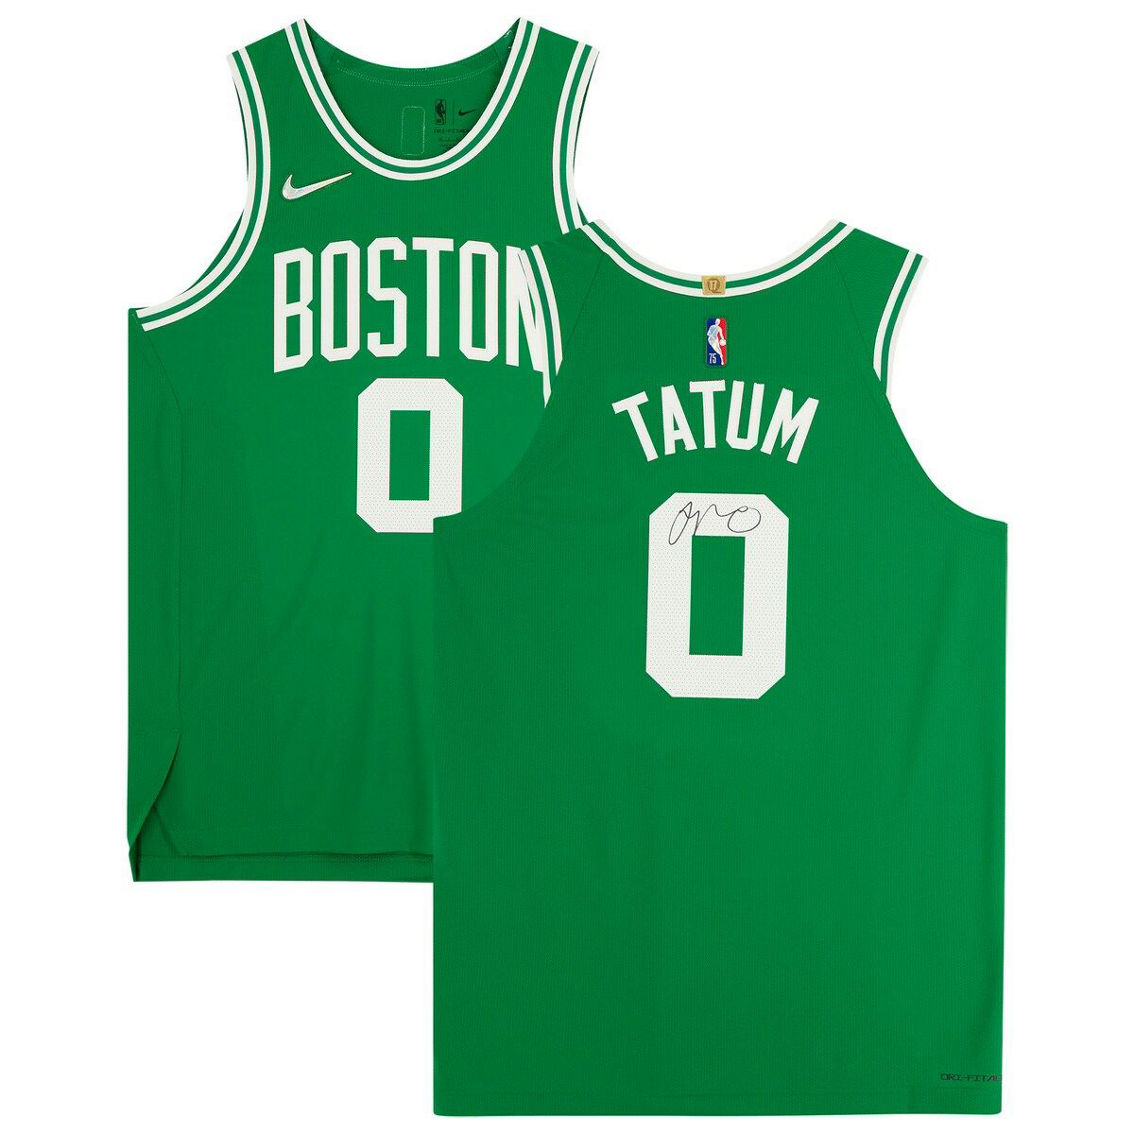 Fanatics Authentic Jayson Tatum Boston Celtics Autographed Green Authentic Jersey